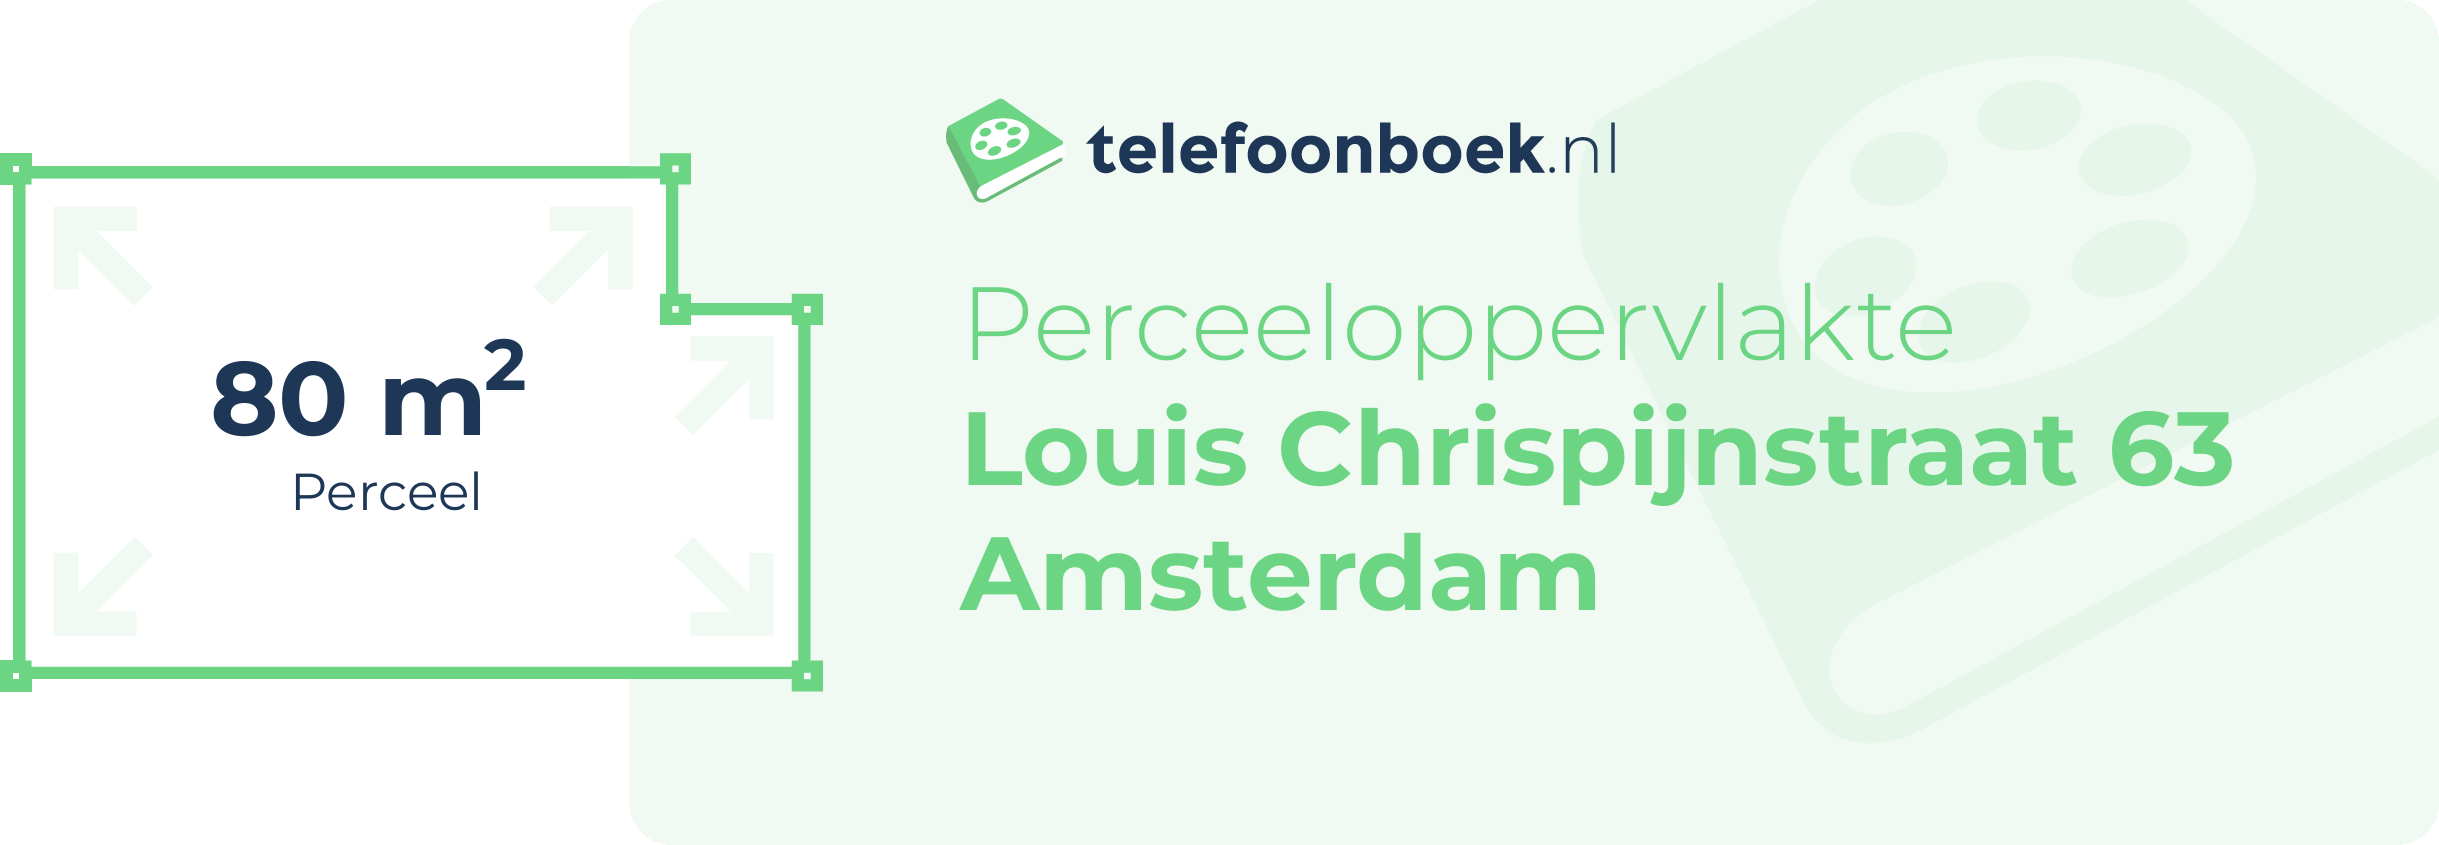 Perceeloppervlakte Louis Chrispijnstraat 63 Amsterdam